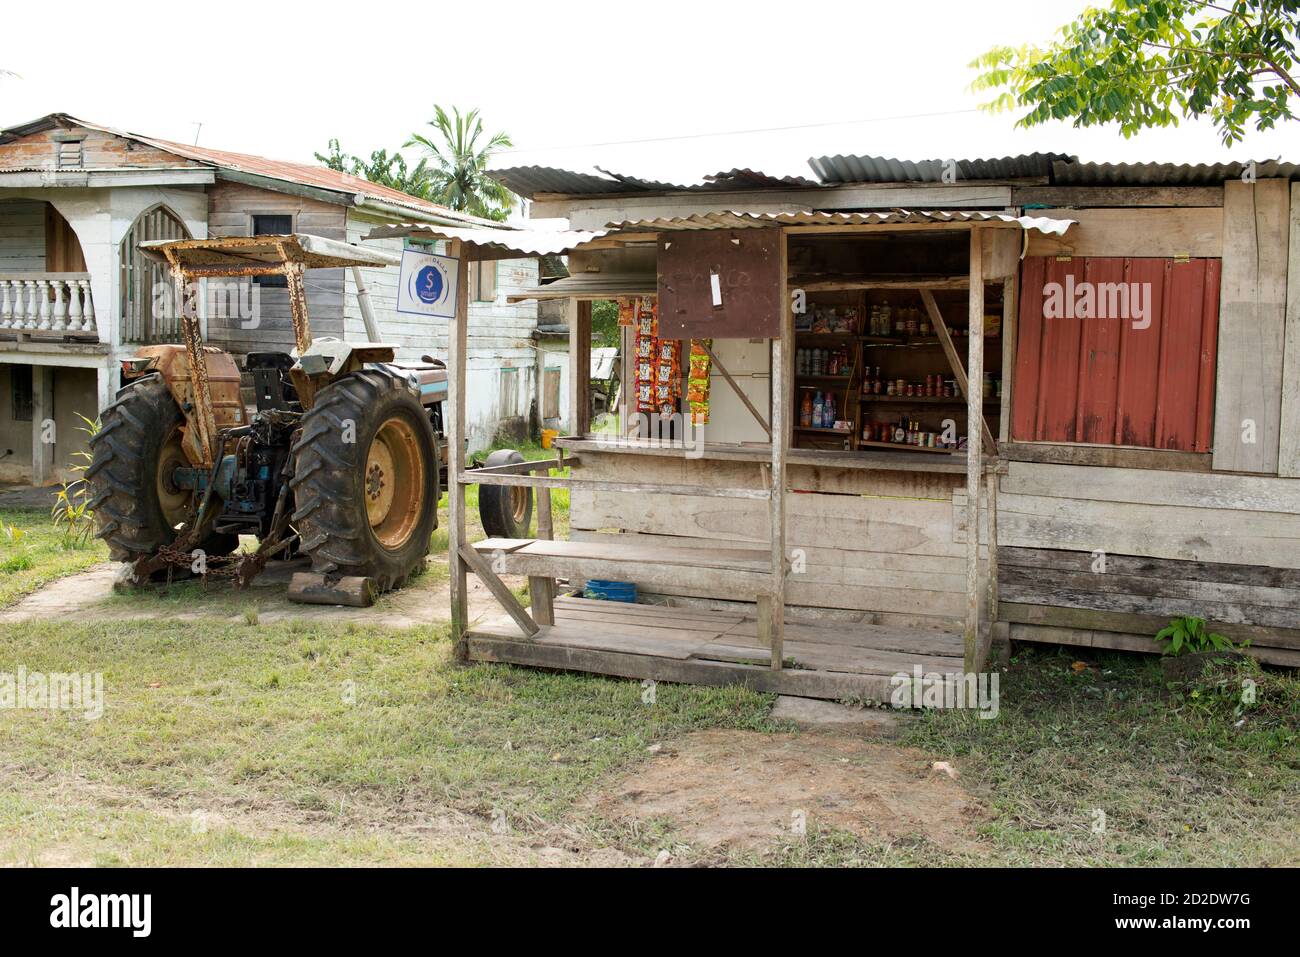 A shop in the small Yucatec Maya village of San Antonio, Cayo District, Belize. Stock Photo